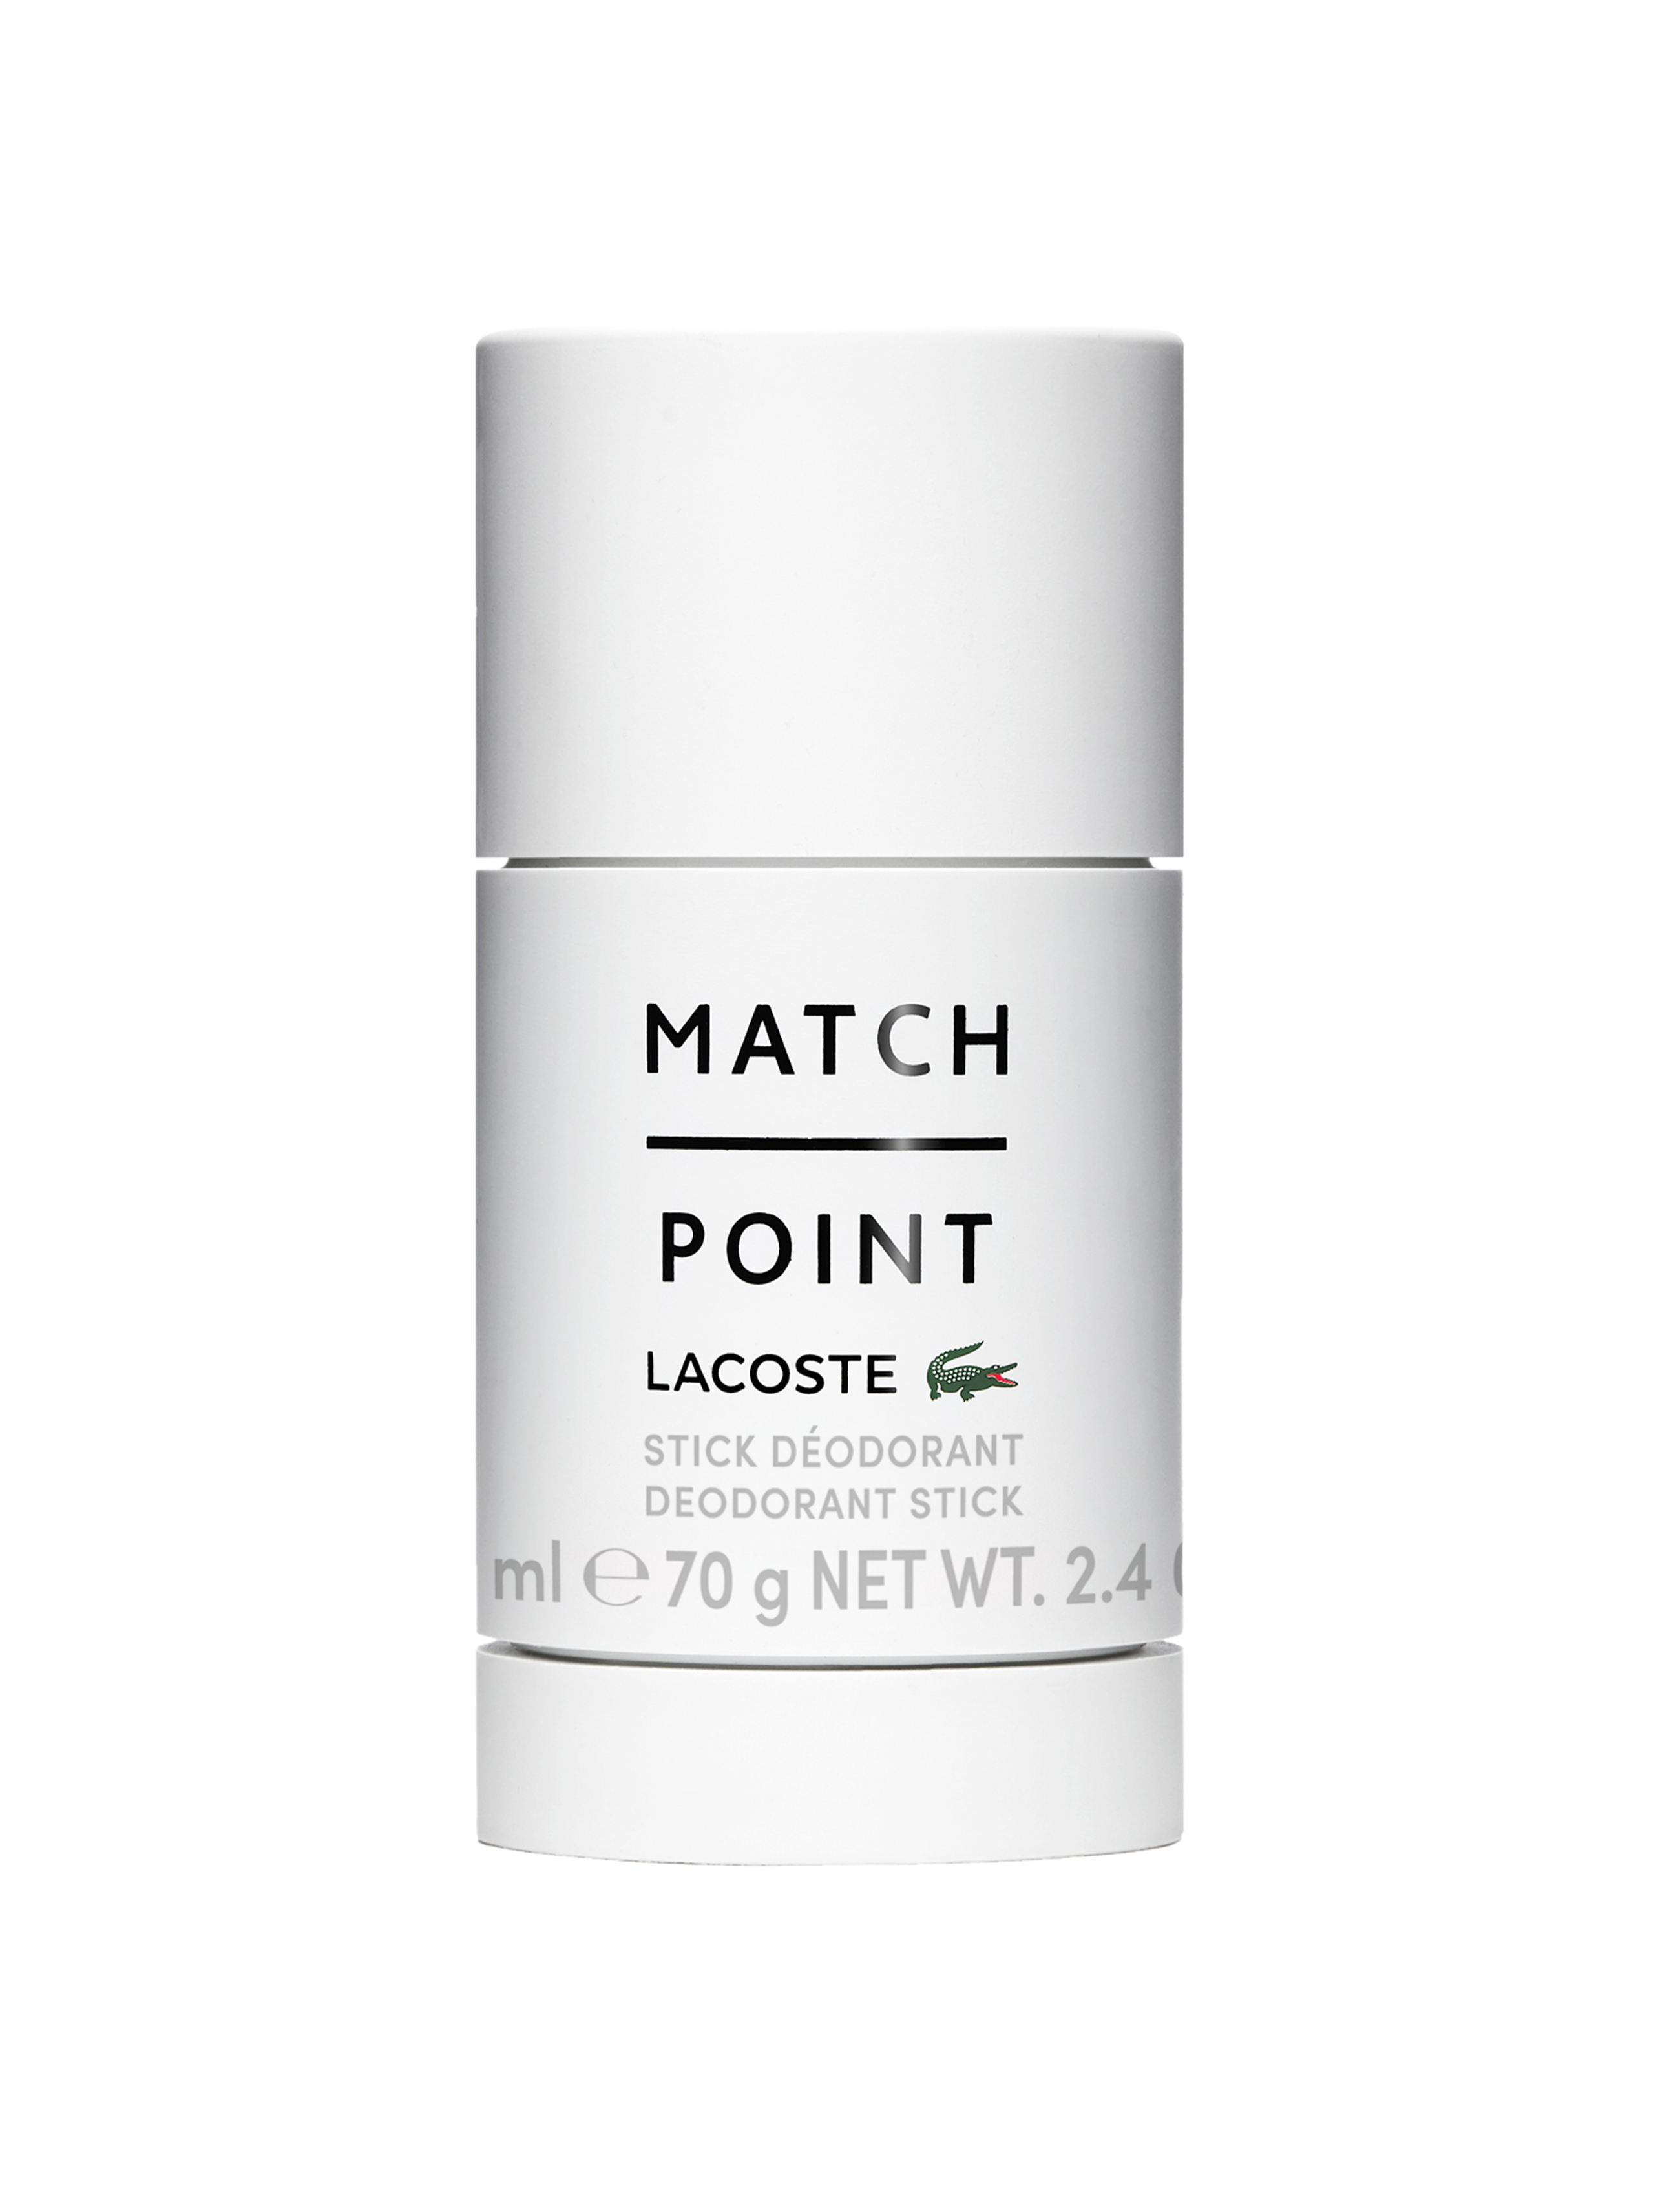 Match Point Deodorant Stick